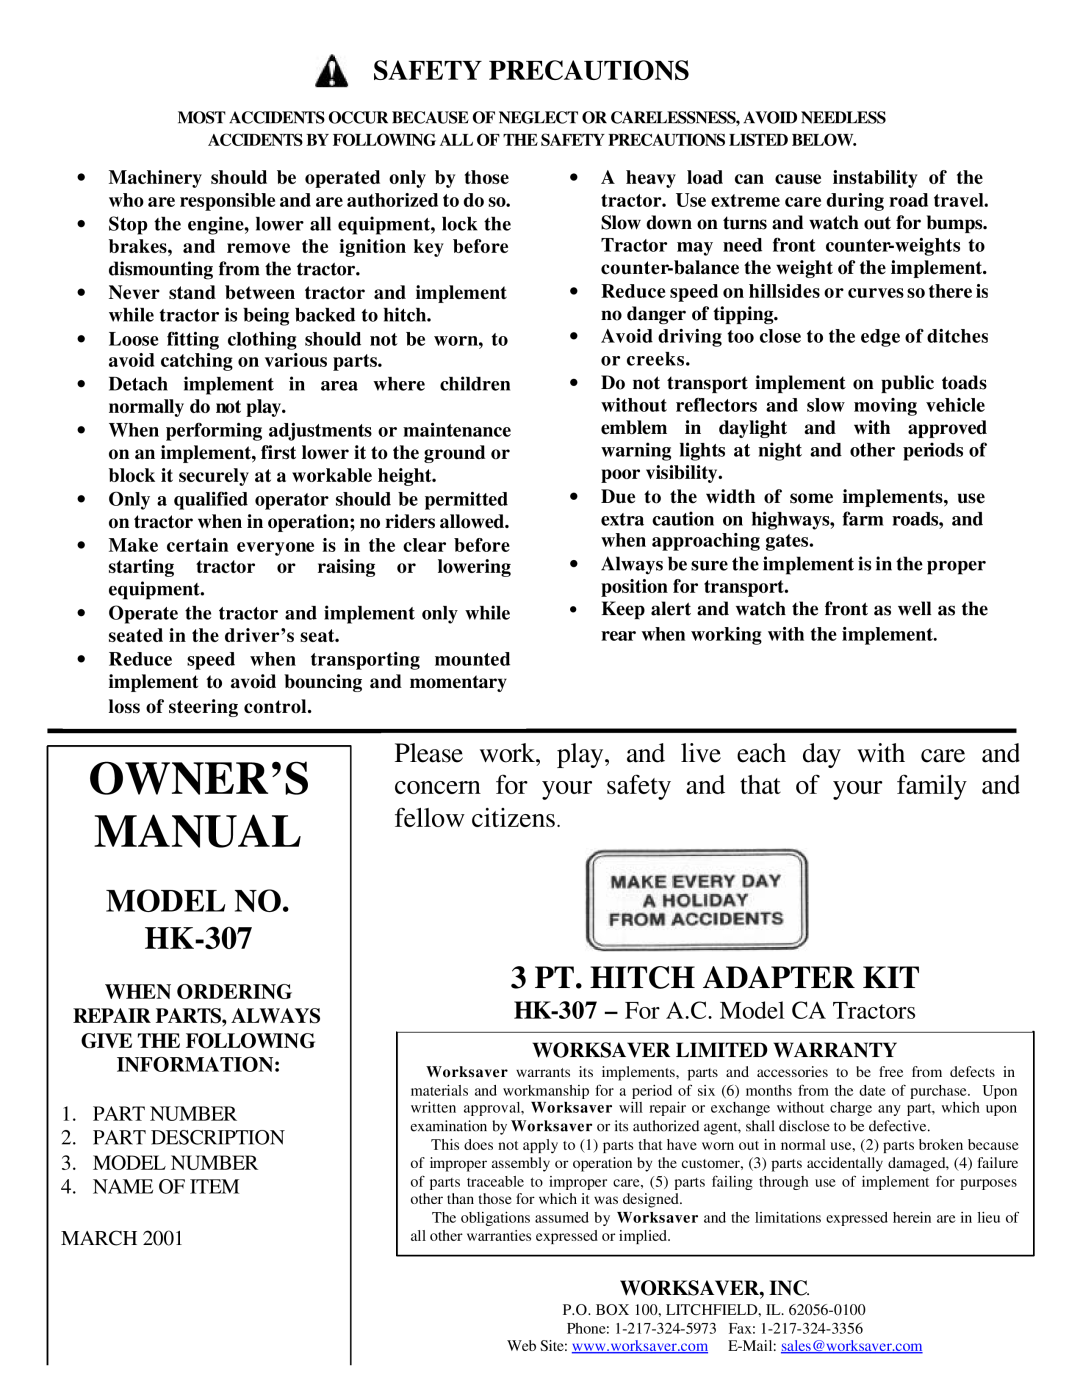 Worksaver 3 PT. HITCH ADAPTER KIT, Safety Precautions, Worksaver Limited Warranty, Worksaver, Inc, MODEL NO HK-307 